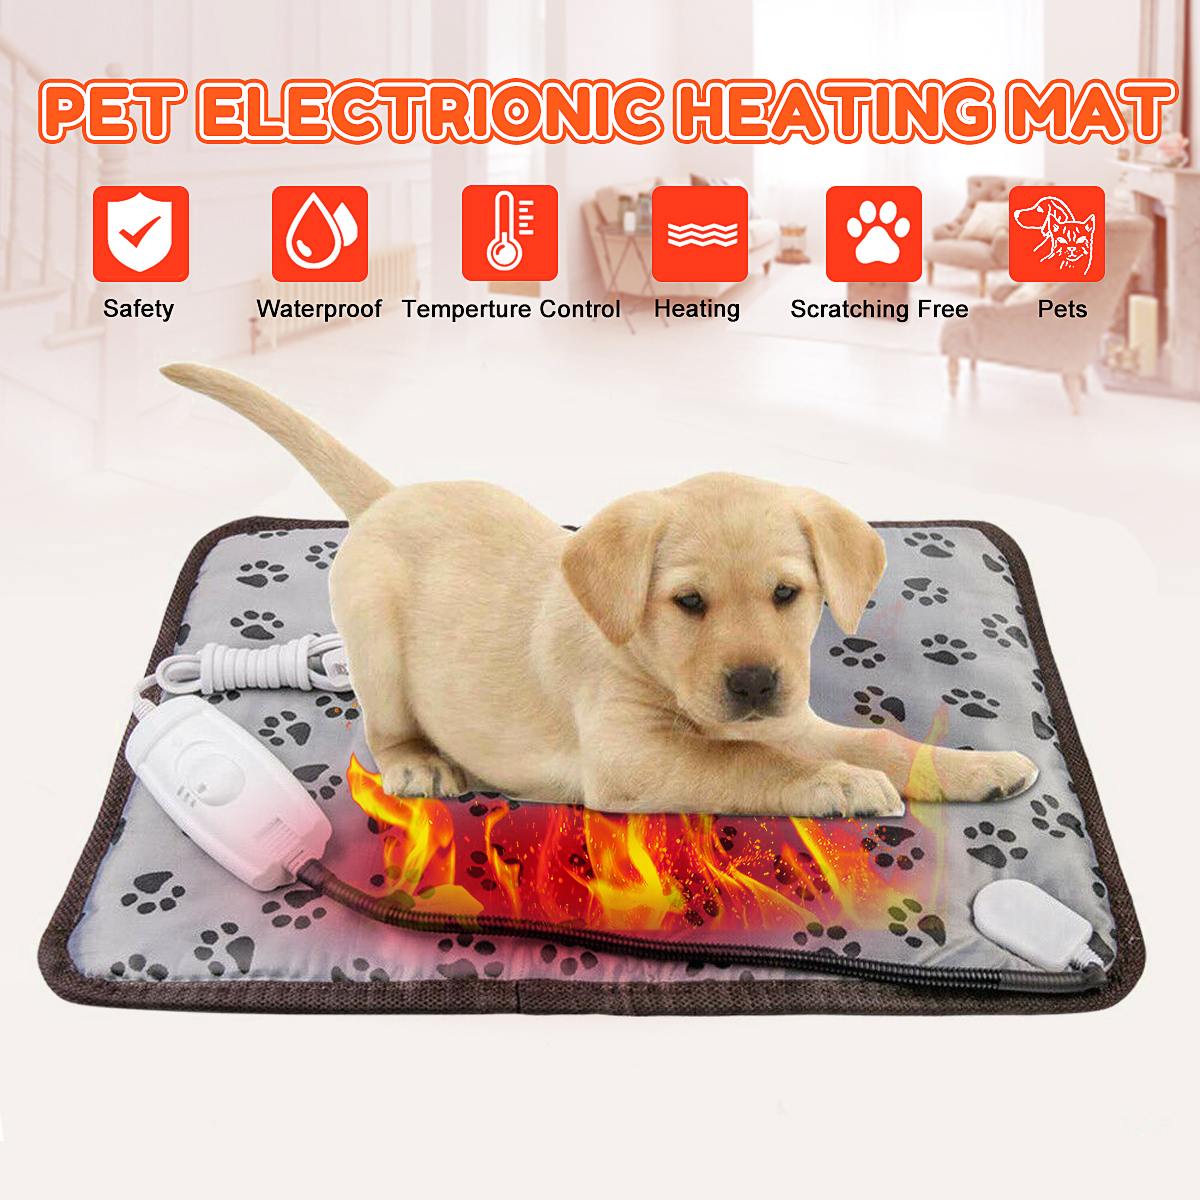 Pet-Electric-Heating-Mat-Cushion-Waterproof-Puppy-Dog-Cat-Heated-Pad-Winter-Warmer-1614553-1